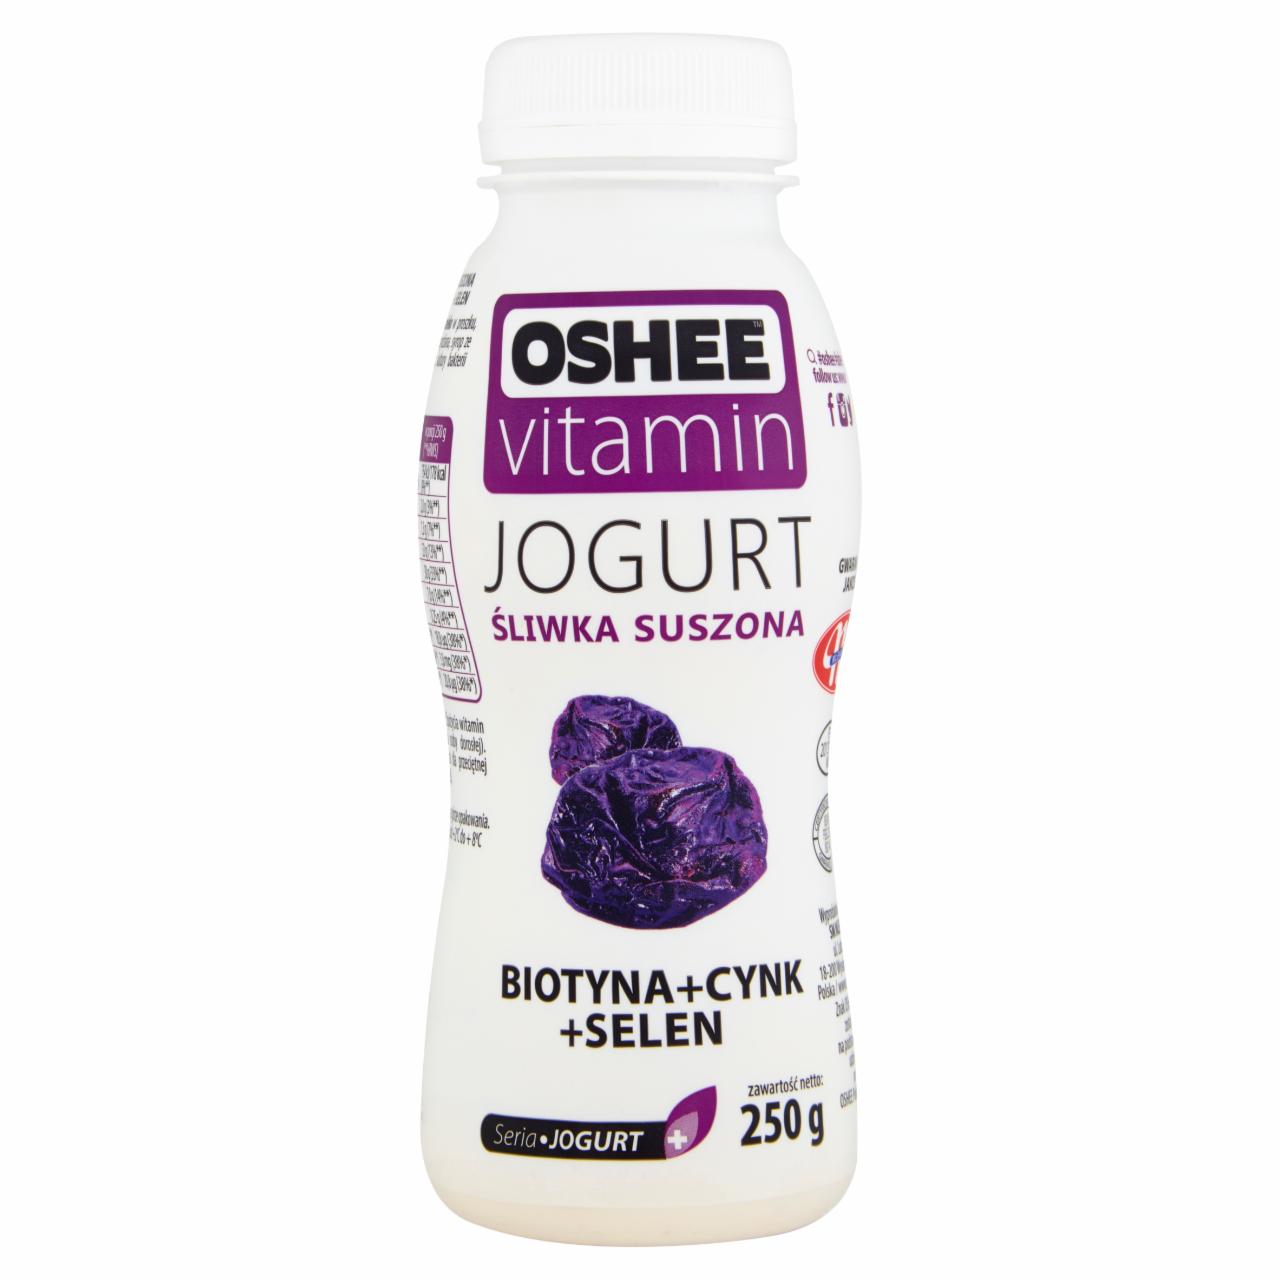 Zdjęcia - Oshee Vitamin Jogurt śliwka suszona 250 g